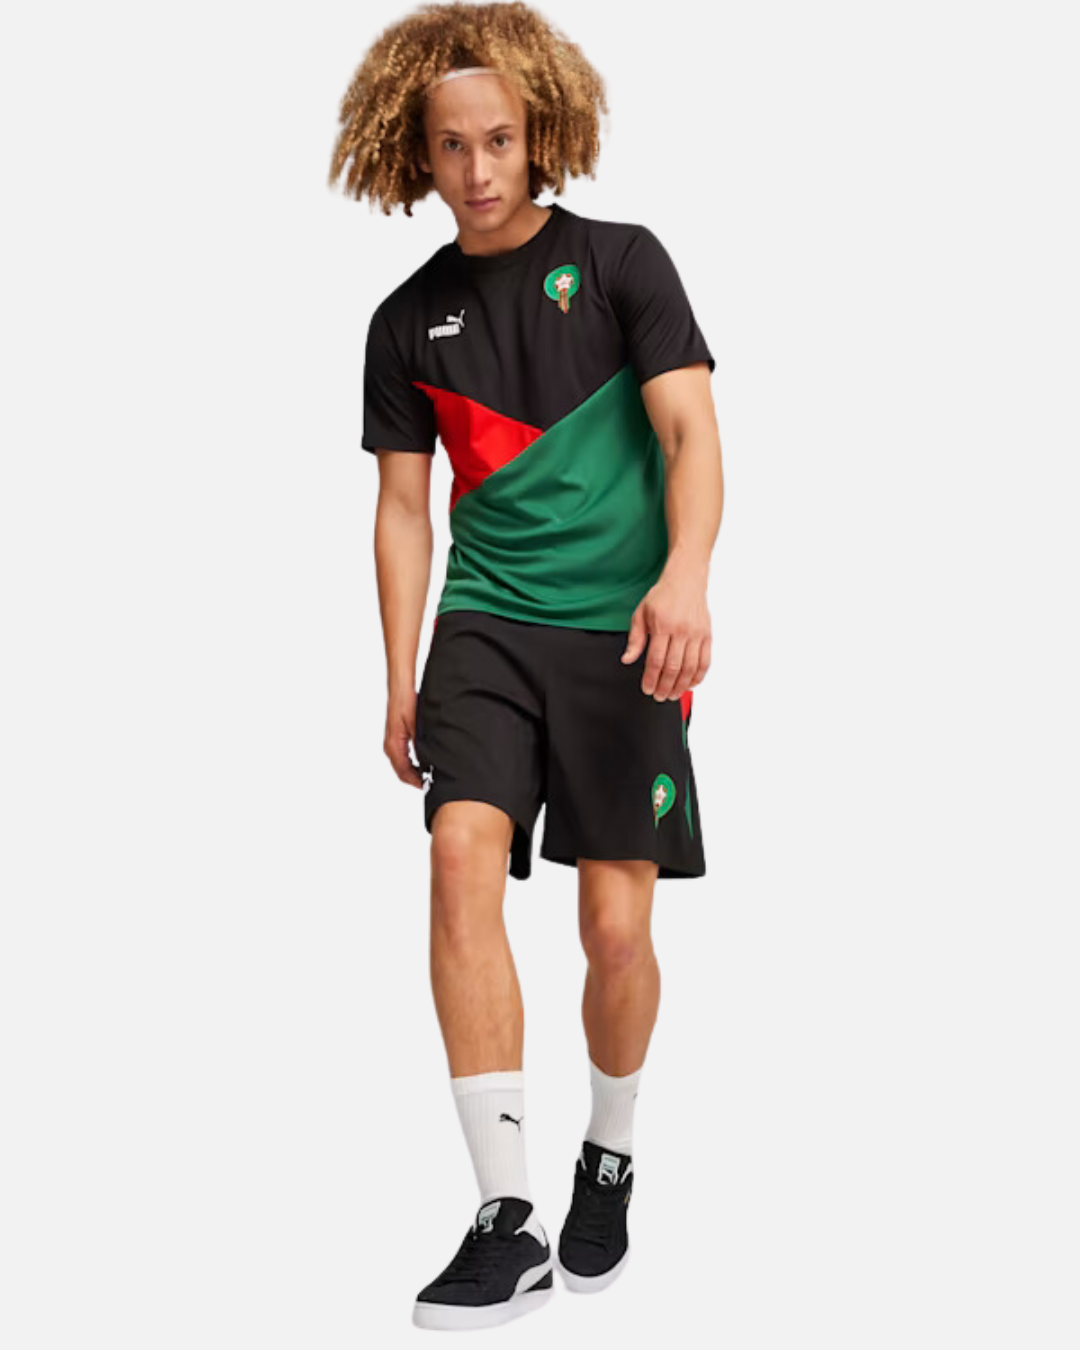 T-shirt Marocco 2024 - Nera/Rossa/Verde